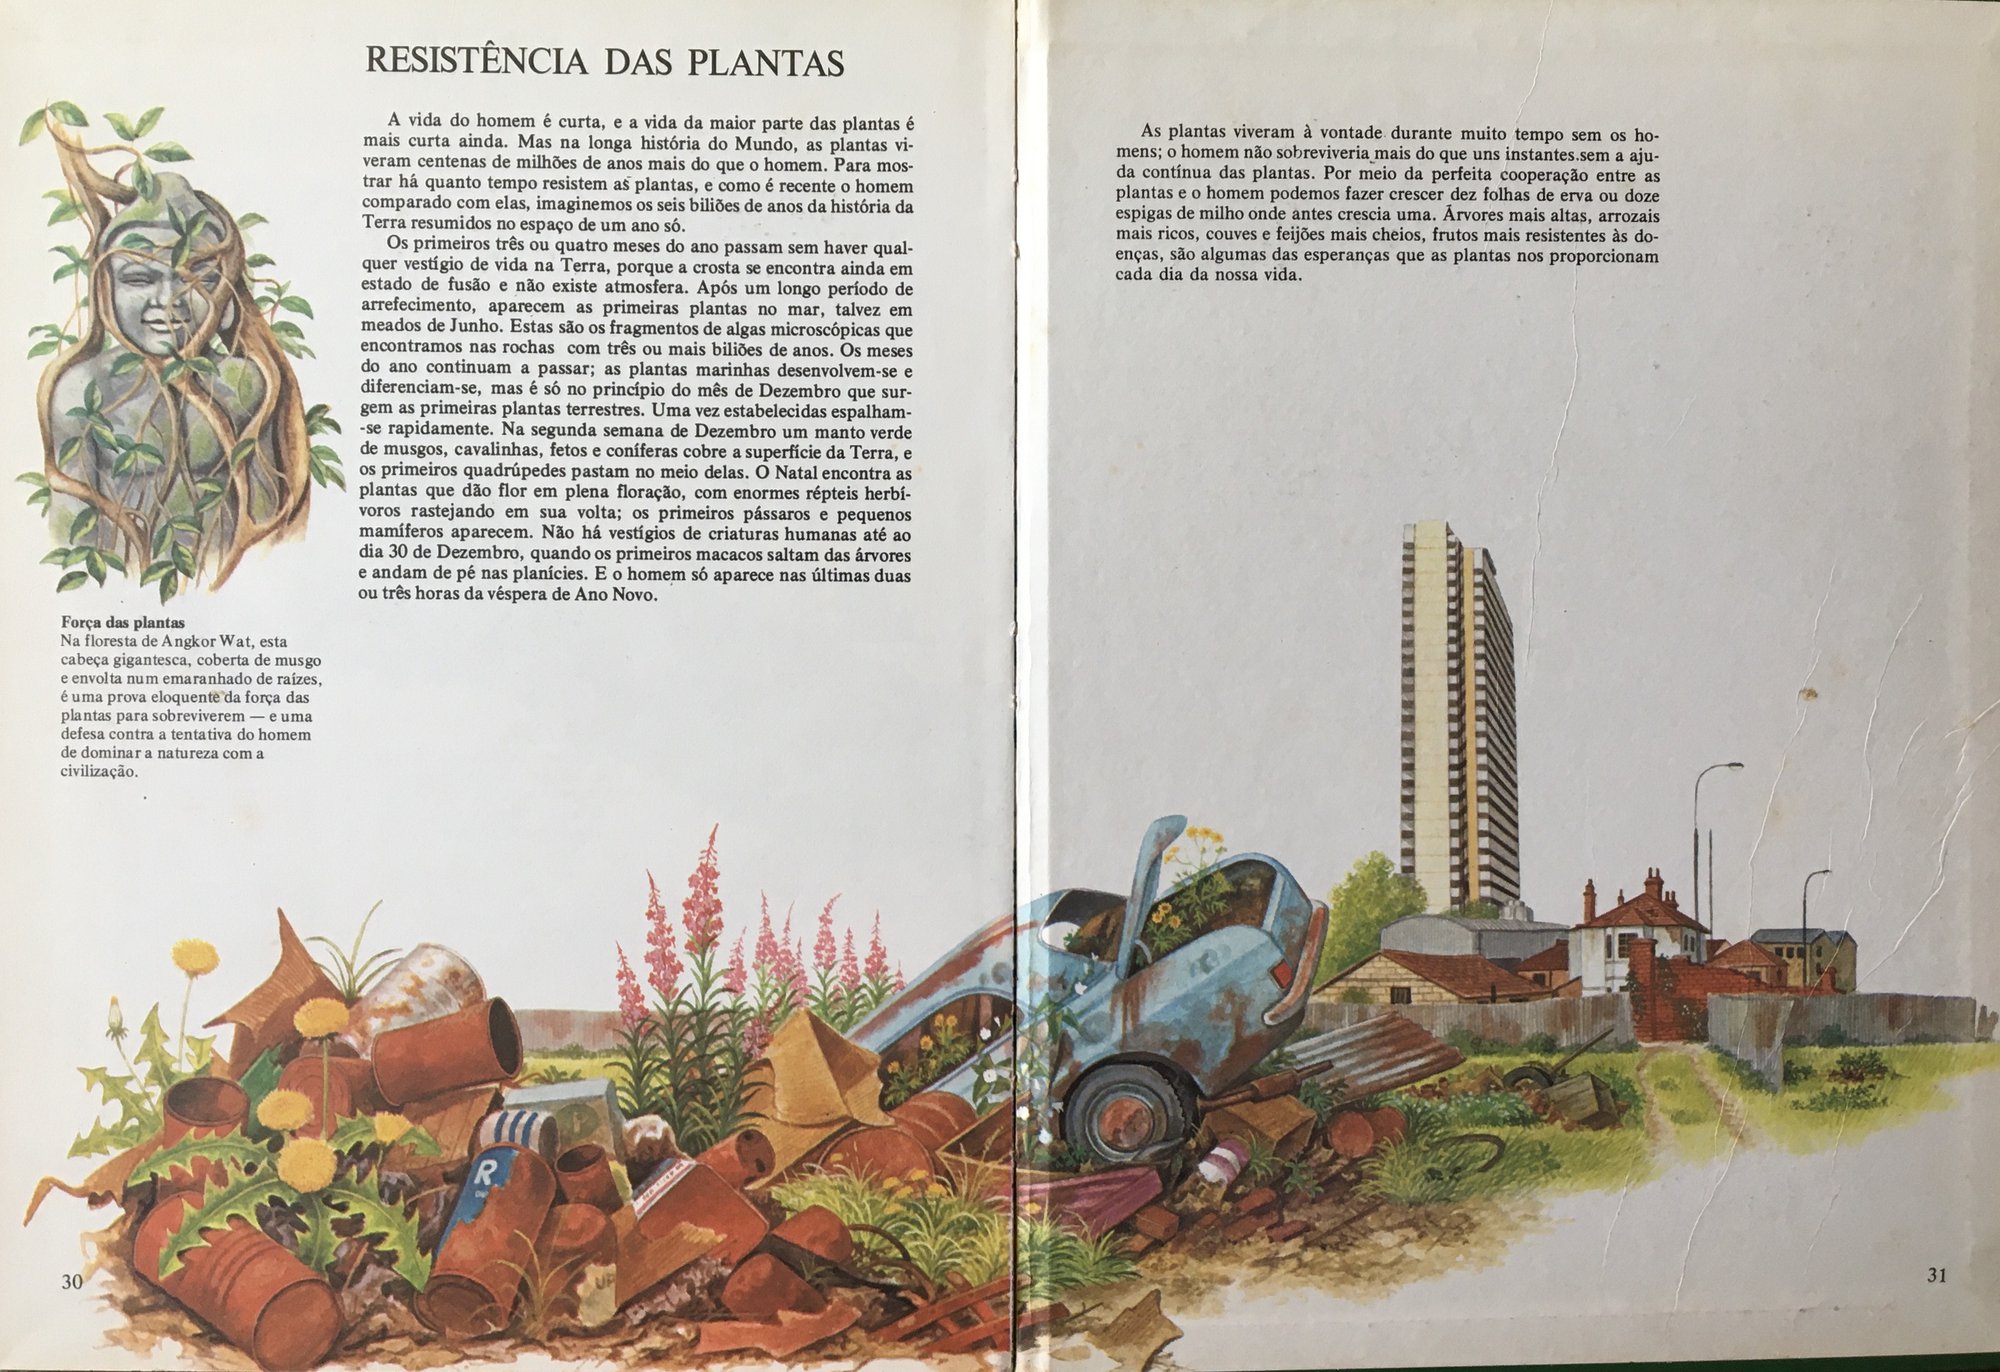 A vida das plantas, 1979